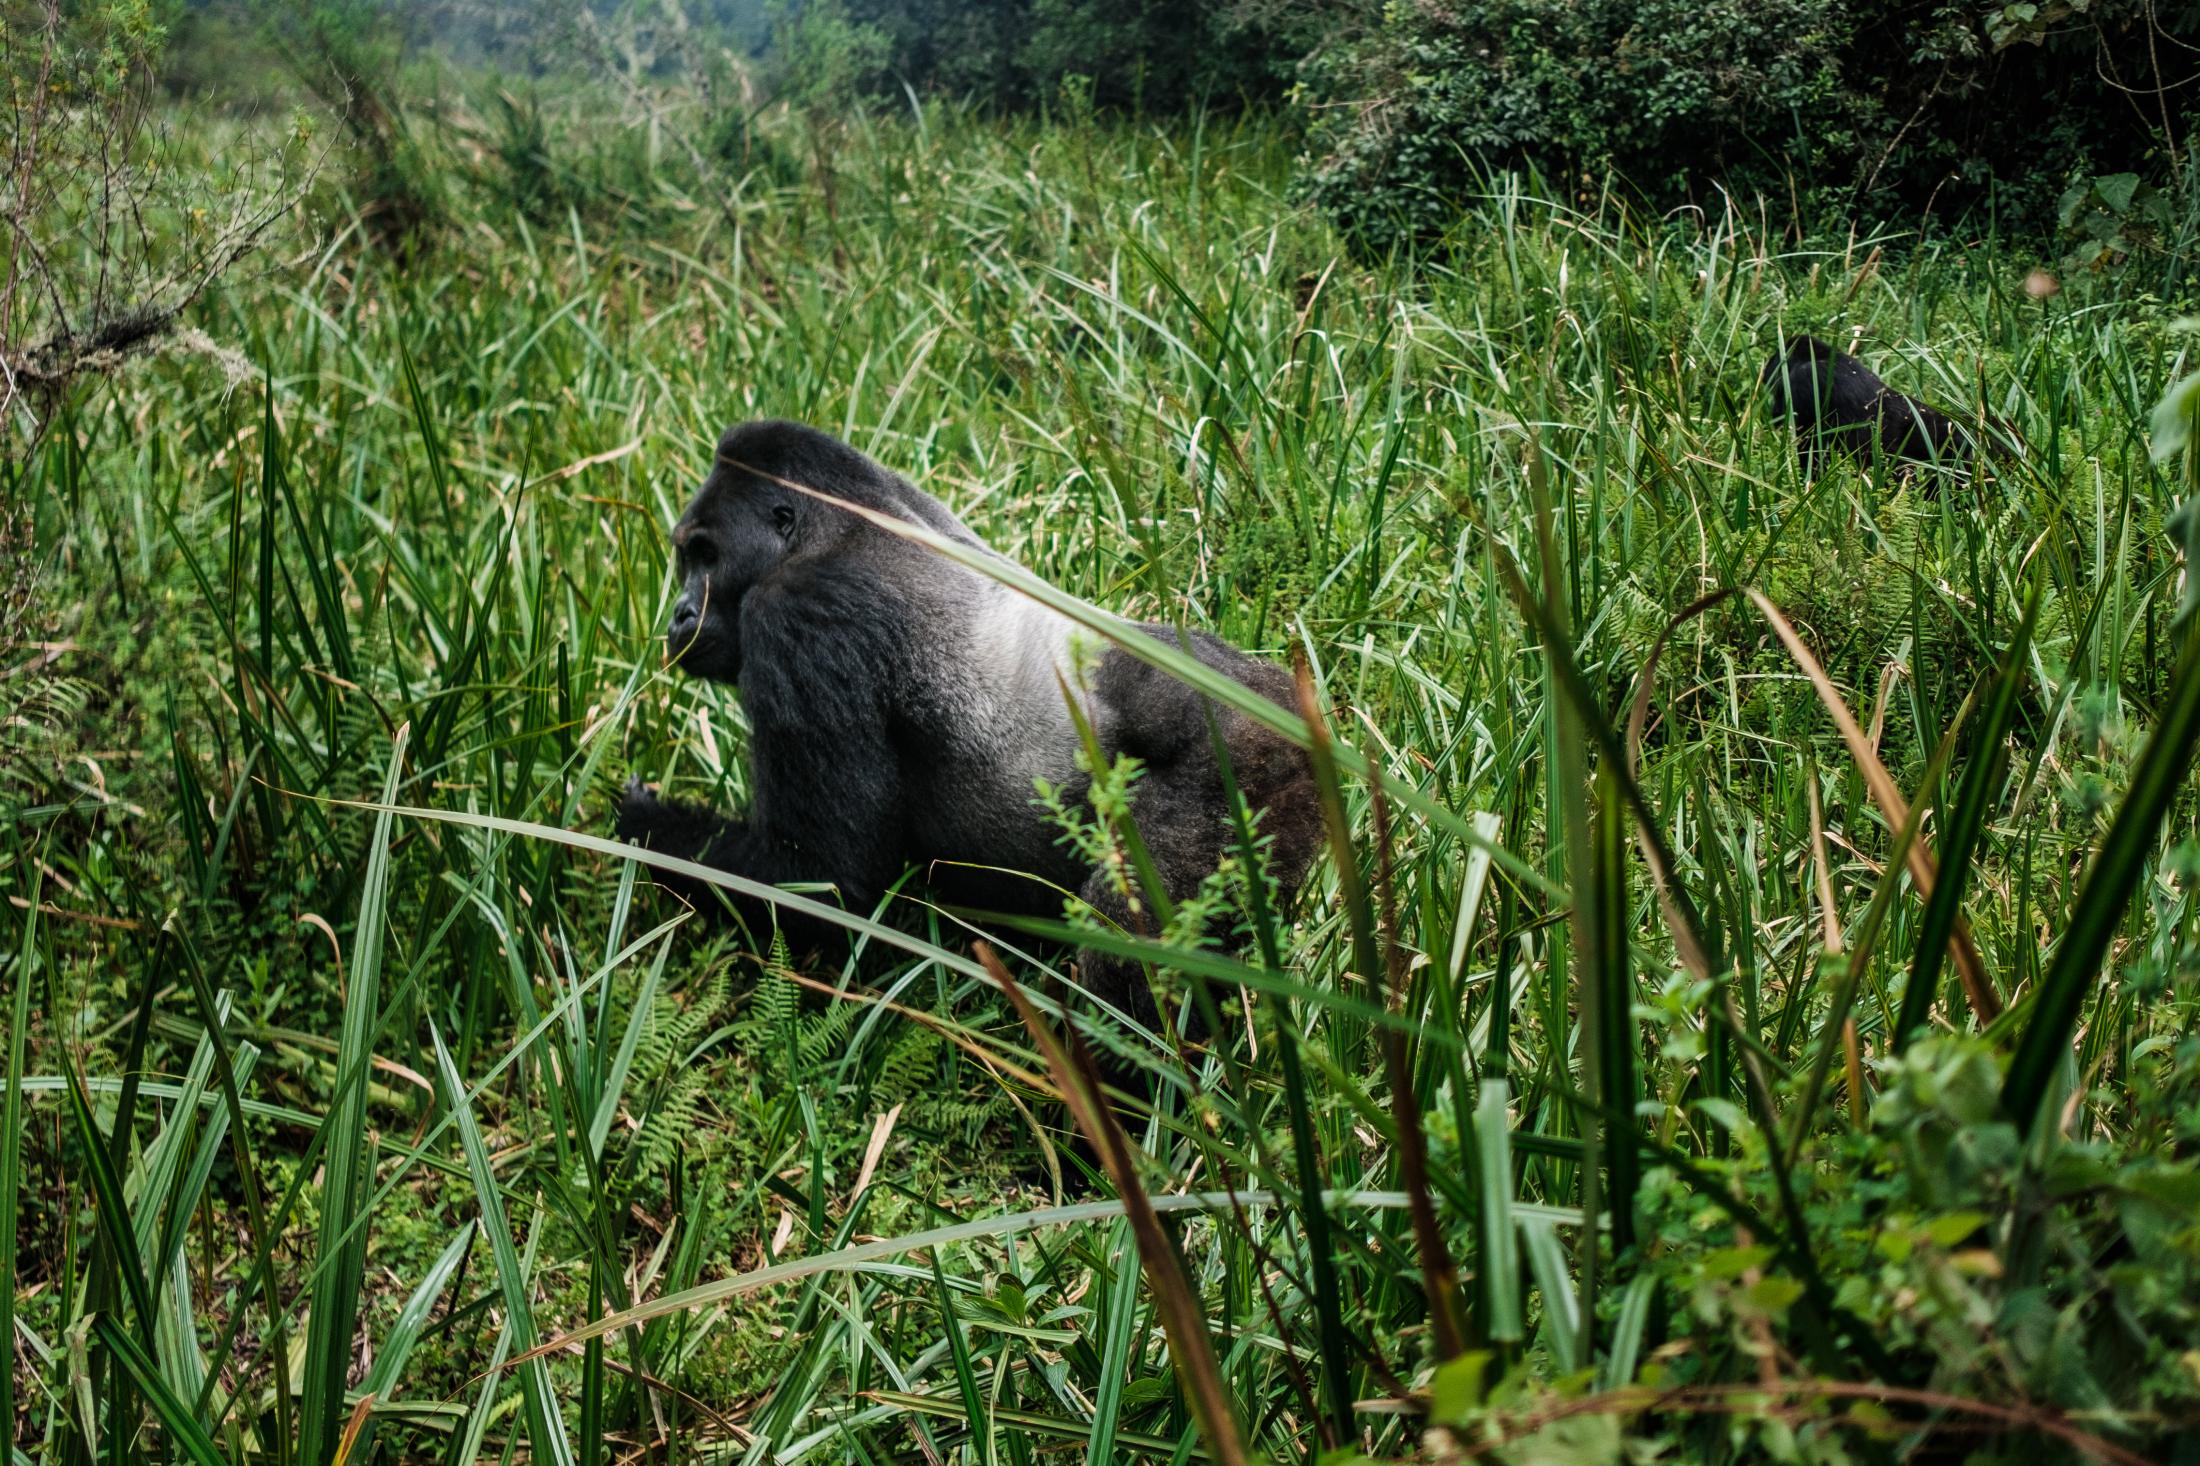 The lowland gorillas of Kahuzi-Biega